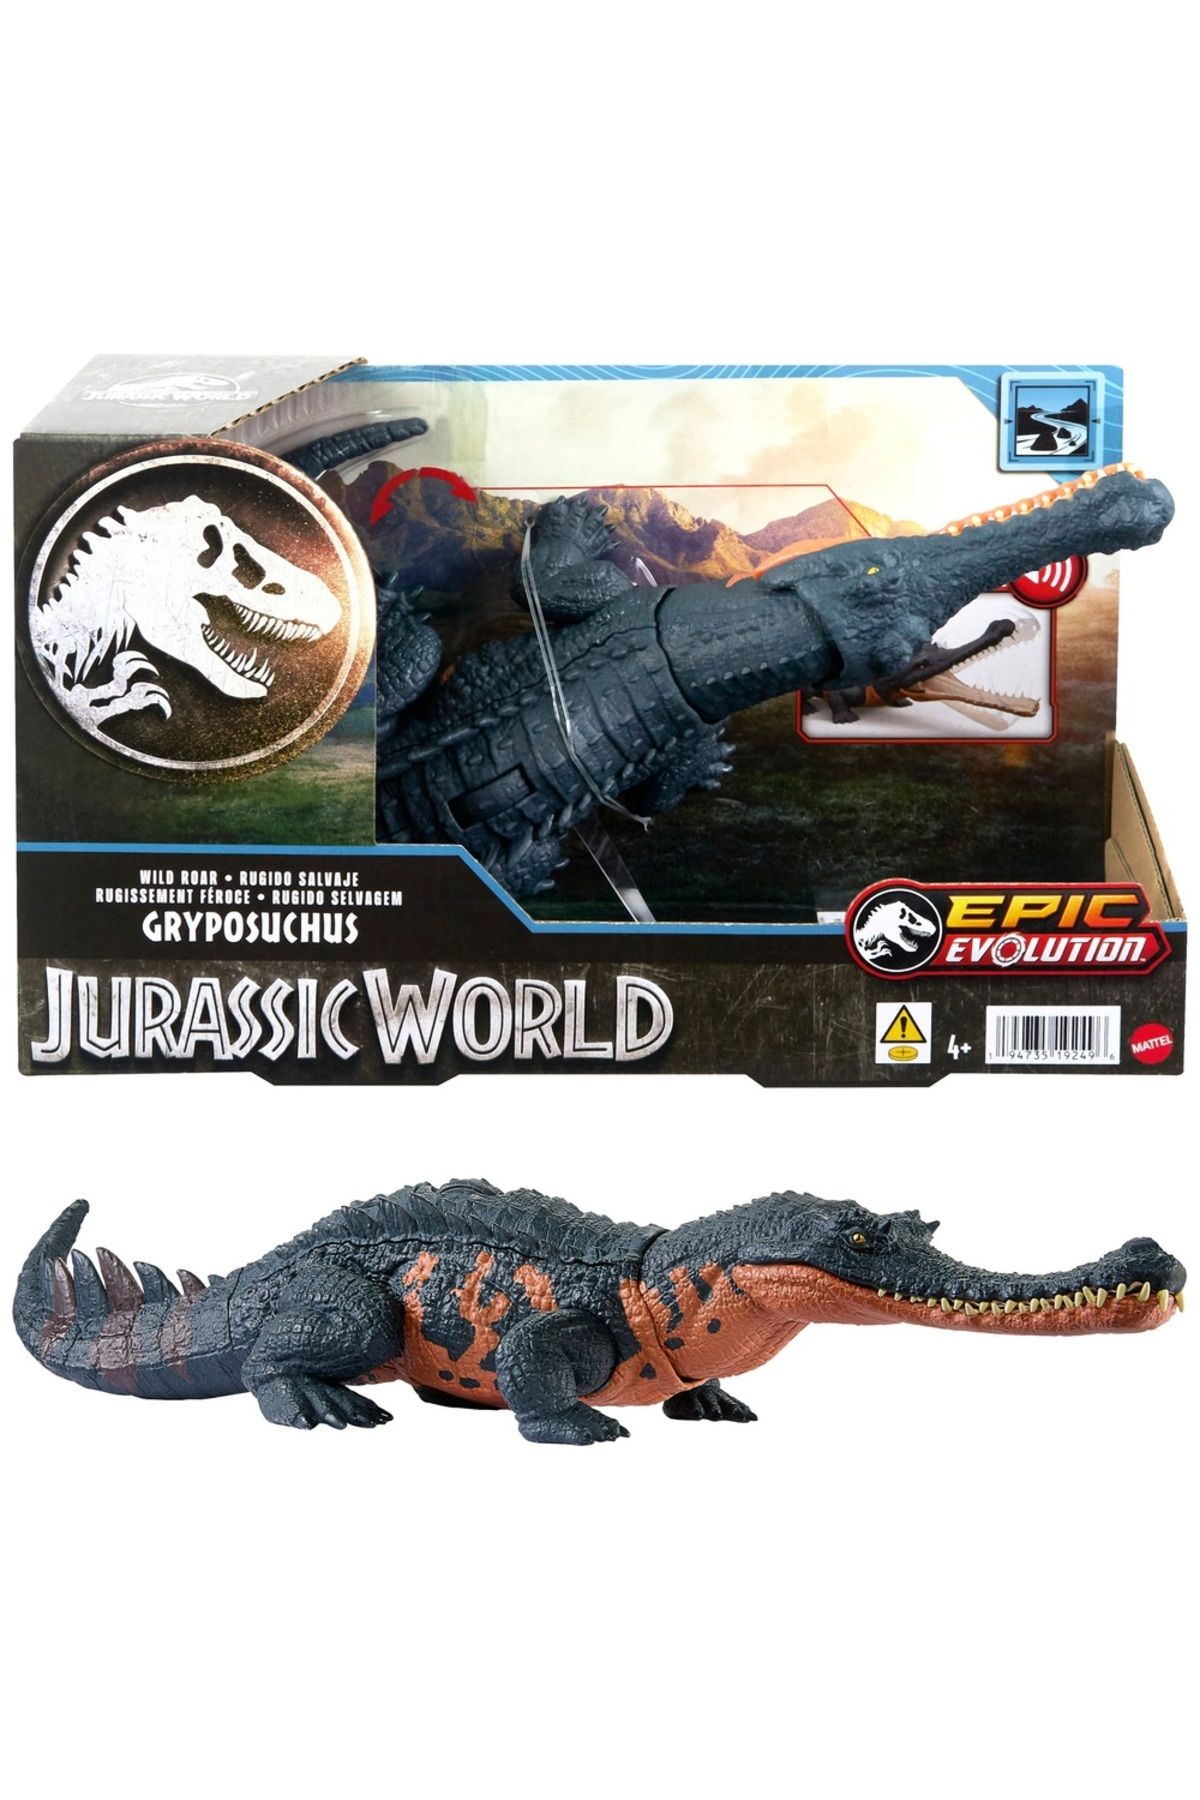 Jurassic World Kükreyen Dinozor Figürleri Gryposuchus HLP14-HTK71